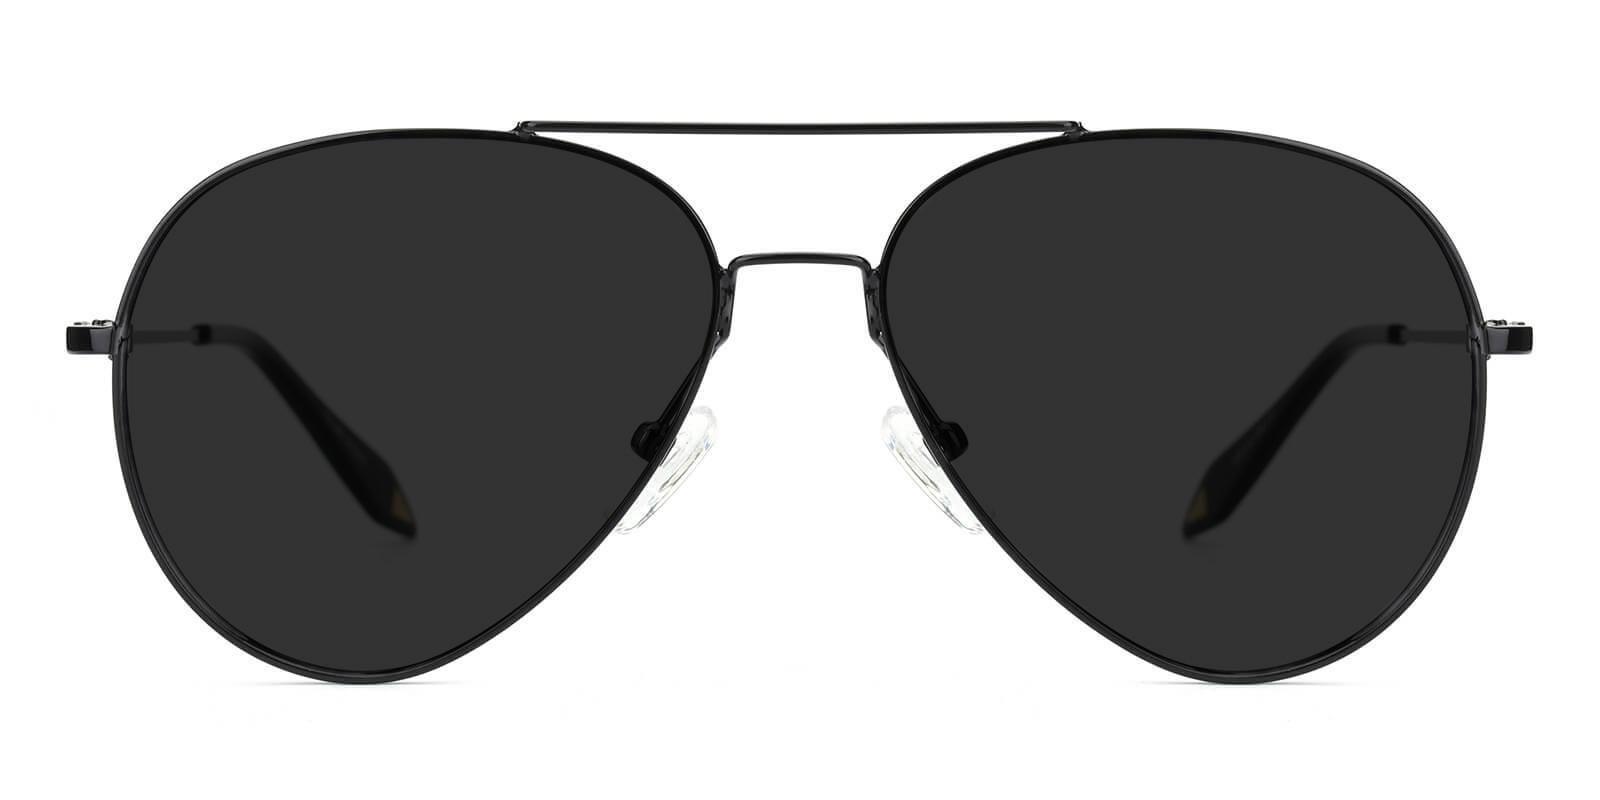 Dapper Black Metal NosePads , Sunglasses Frames from ABBE Glasses